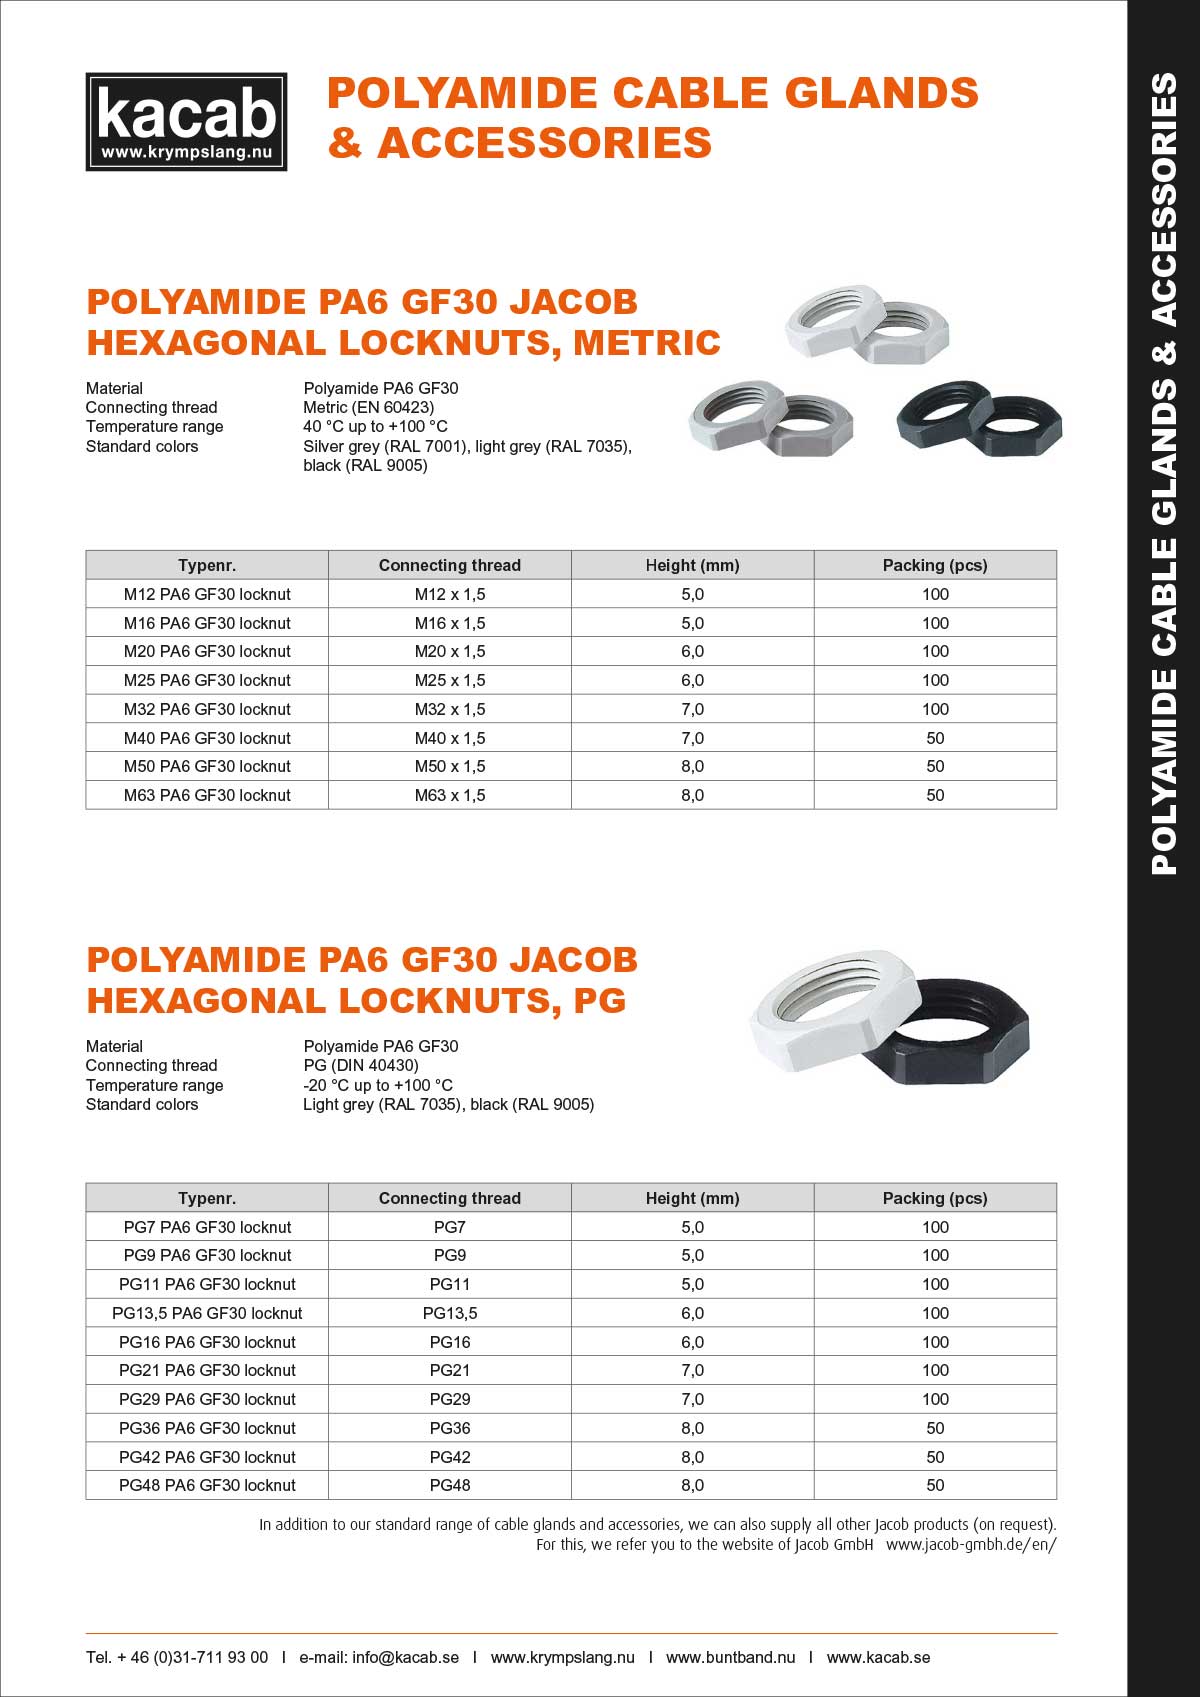 Polyamide PA6 GF30 Jacob hexagonal locknuts-metric-ram